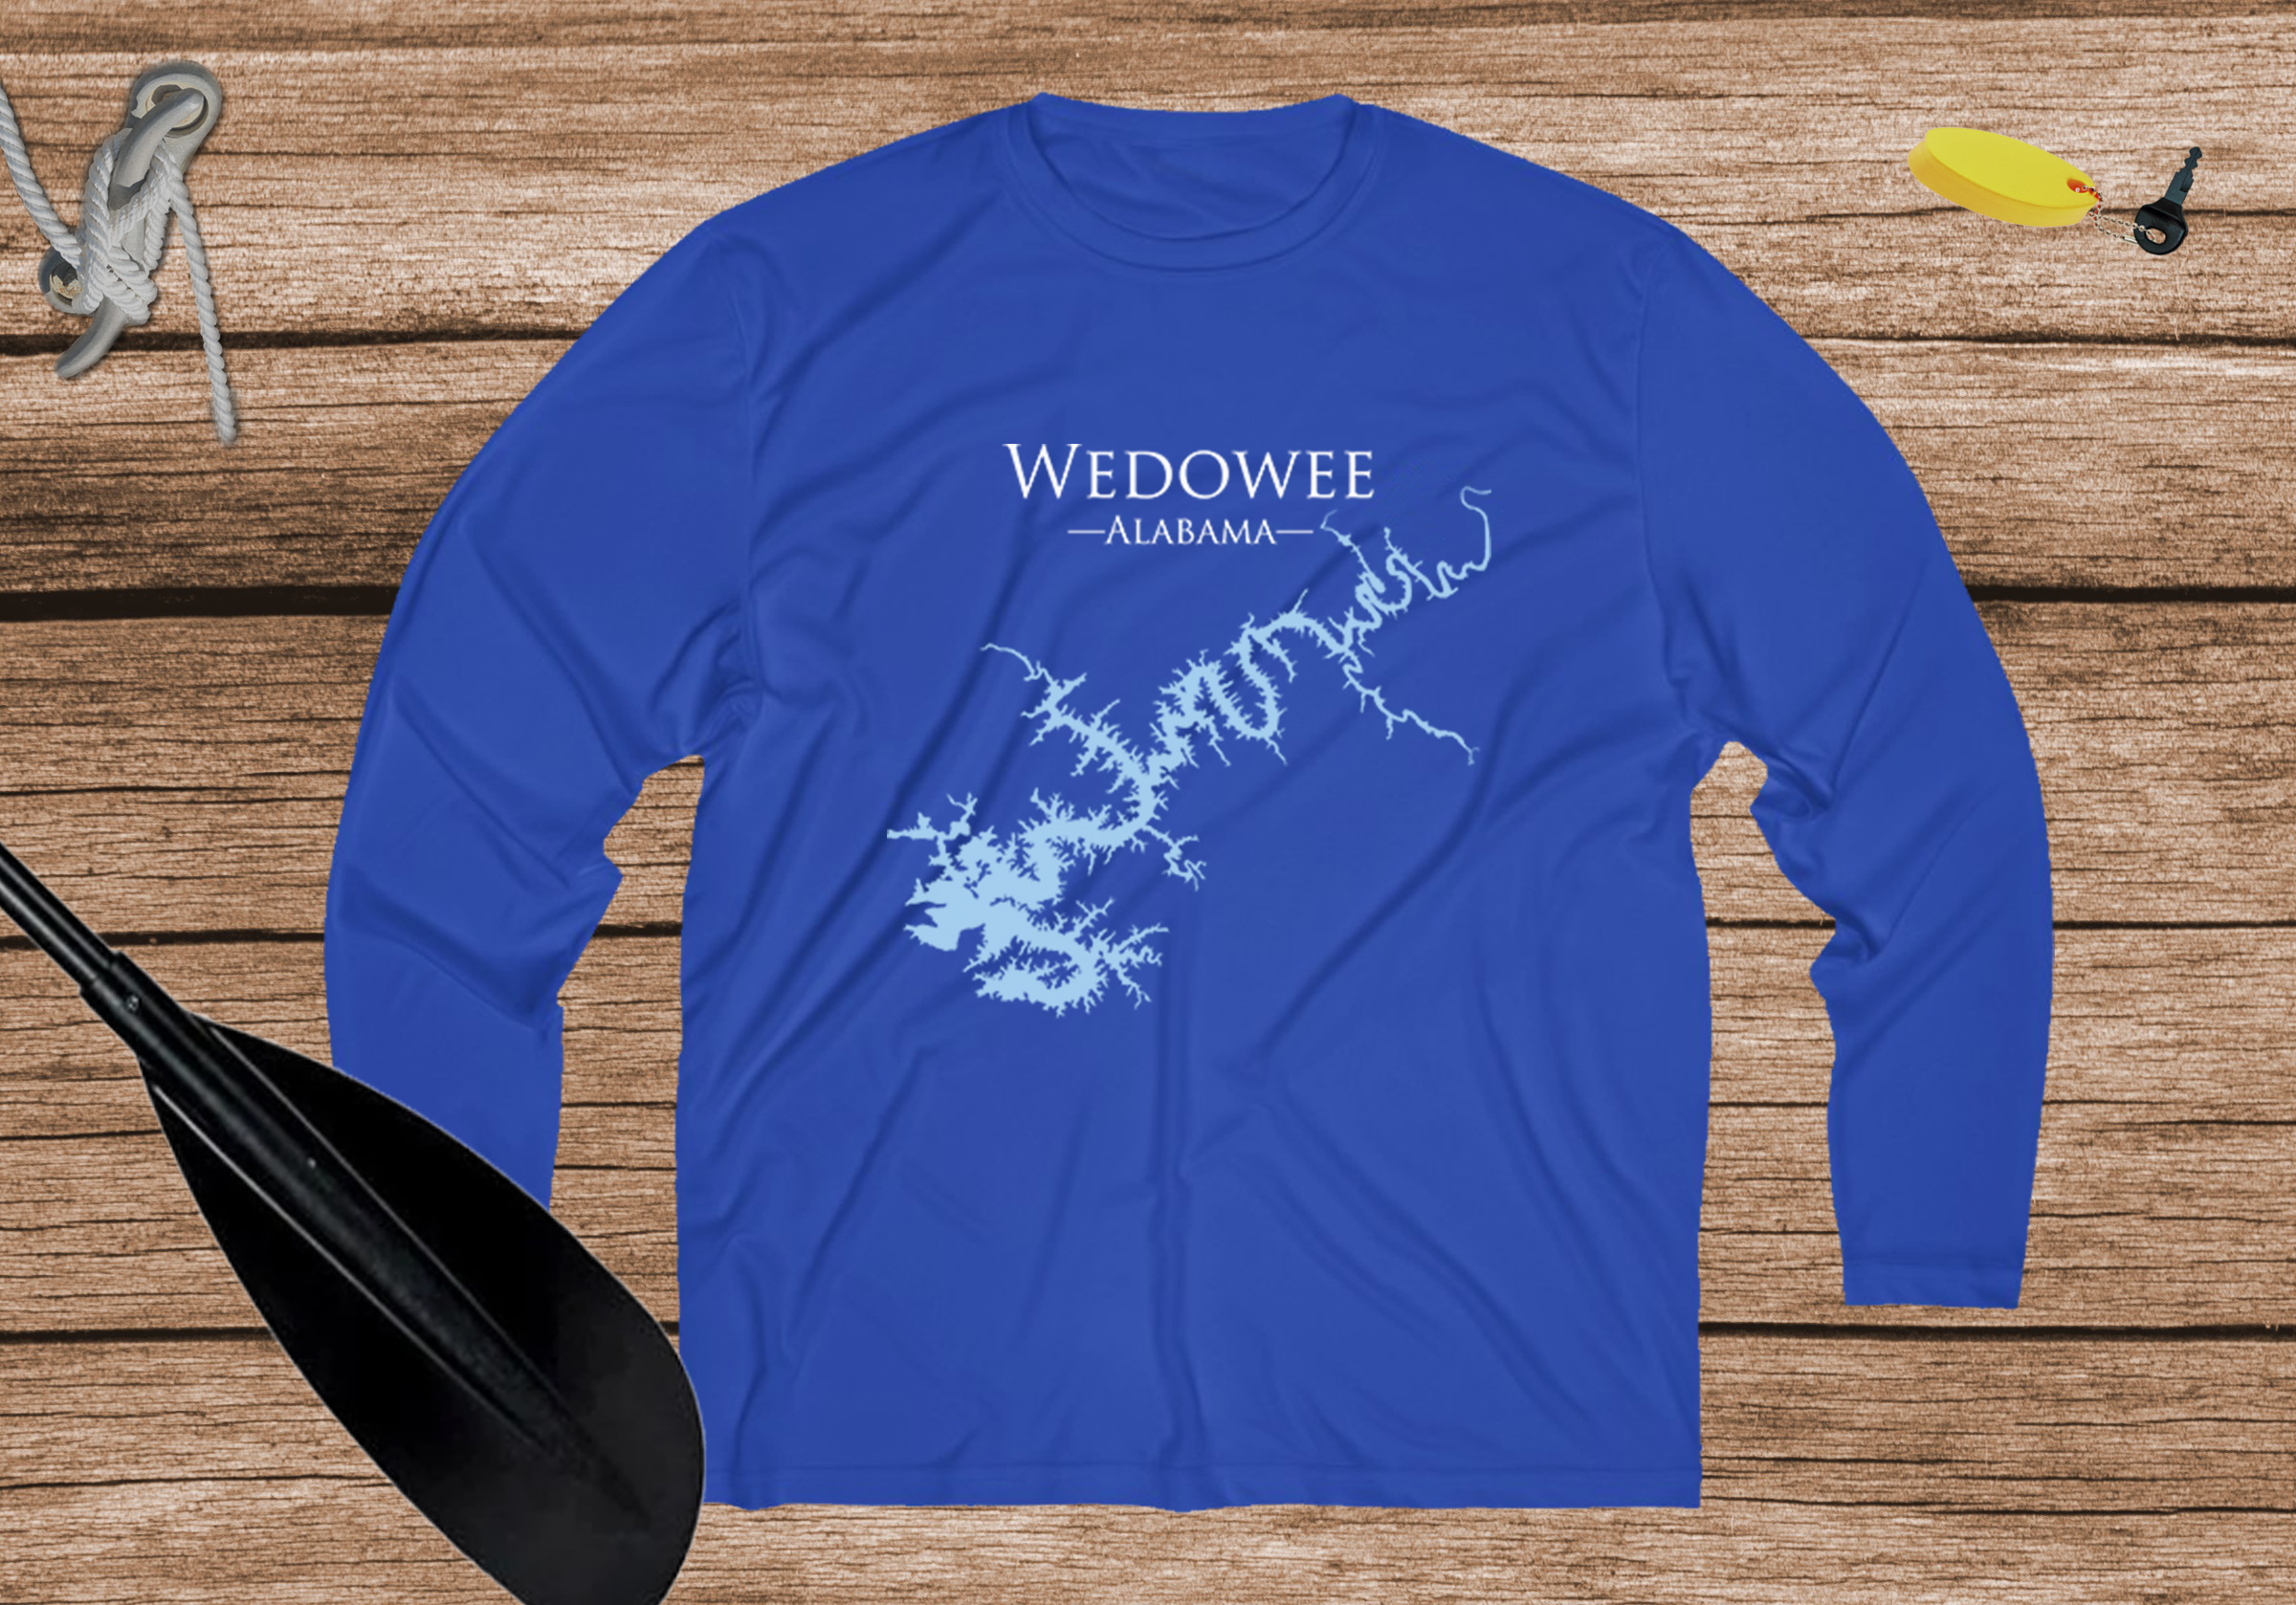 Wedowee Dri-fit Boating Shirt - Breathable Material- Men's Long Sleeve Moisture Wicking Tee - Alabama Lake